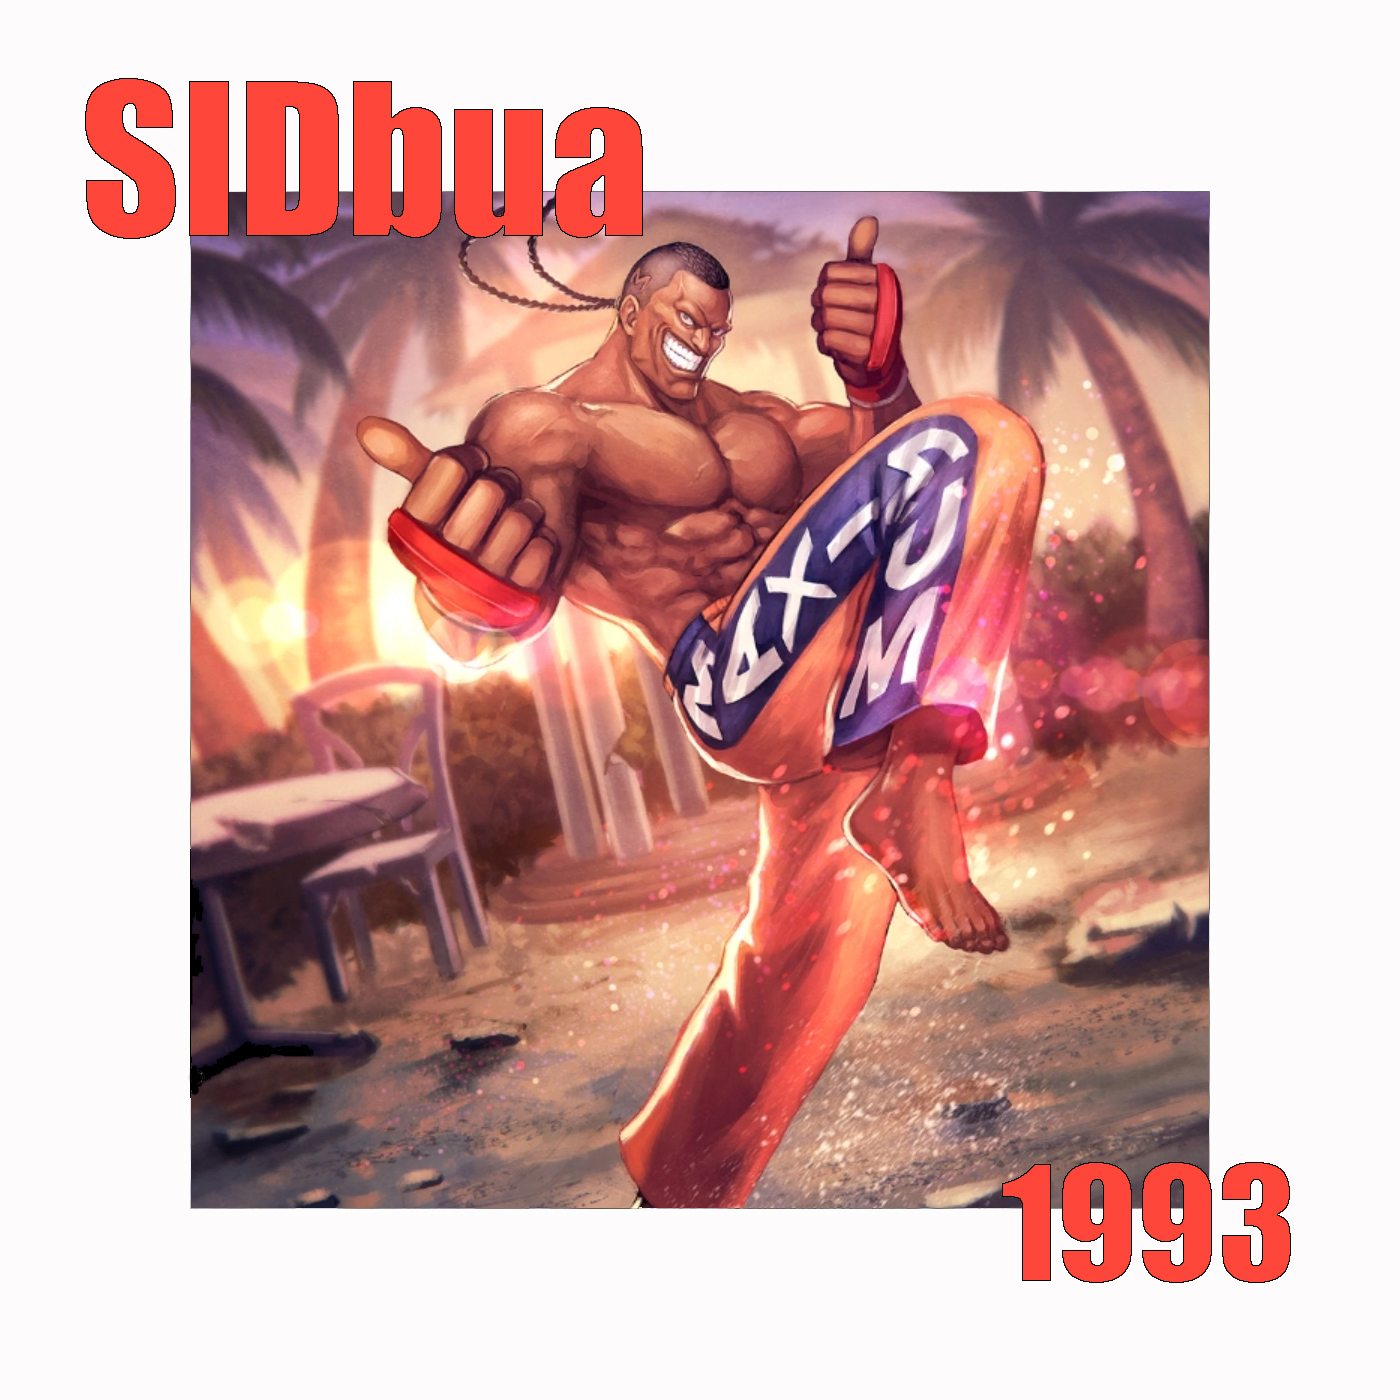 SIDbua 1993